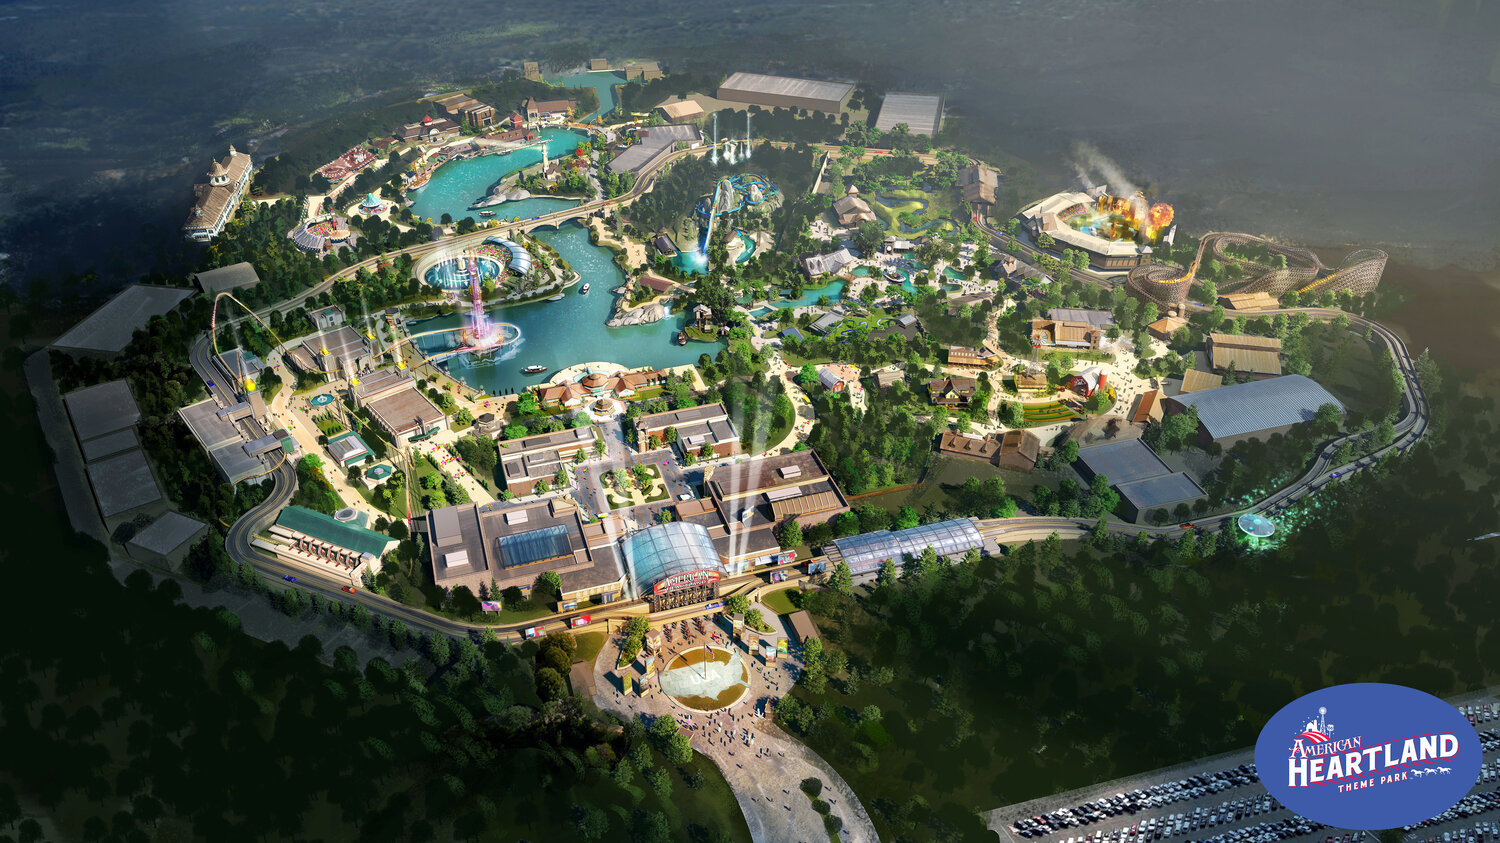 An artist rendering depicts an aerial view of the American Heartland Theme Park and Resort, a more than $2 billion entertainment destination development near Vinita, Oklahoma.